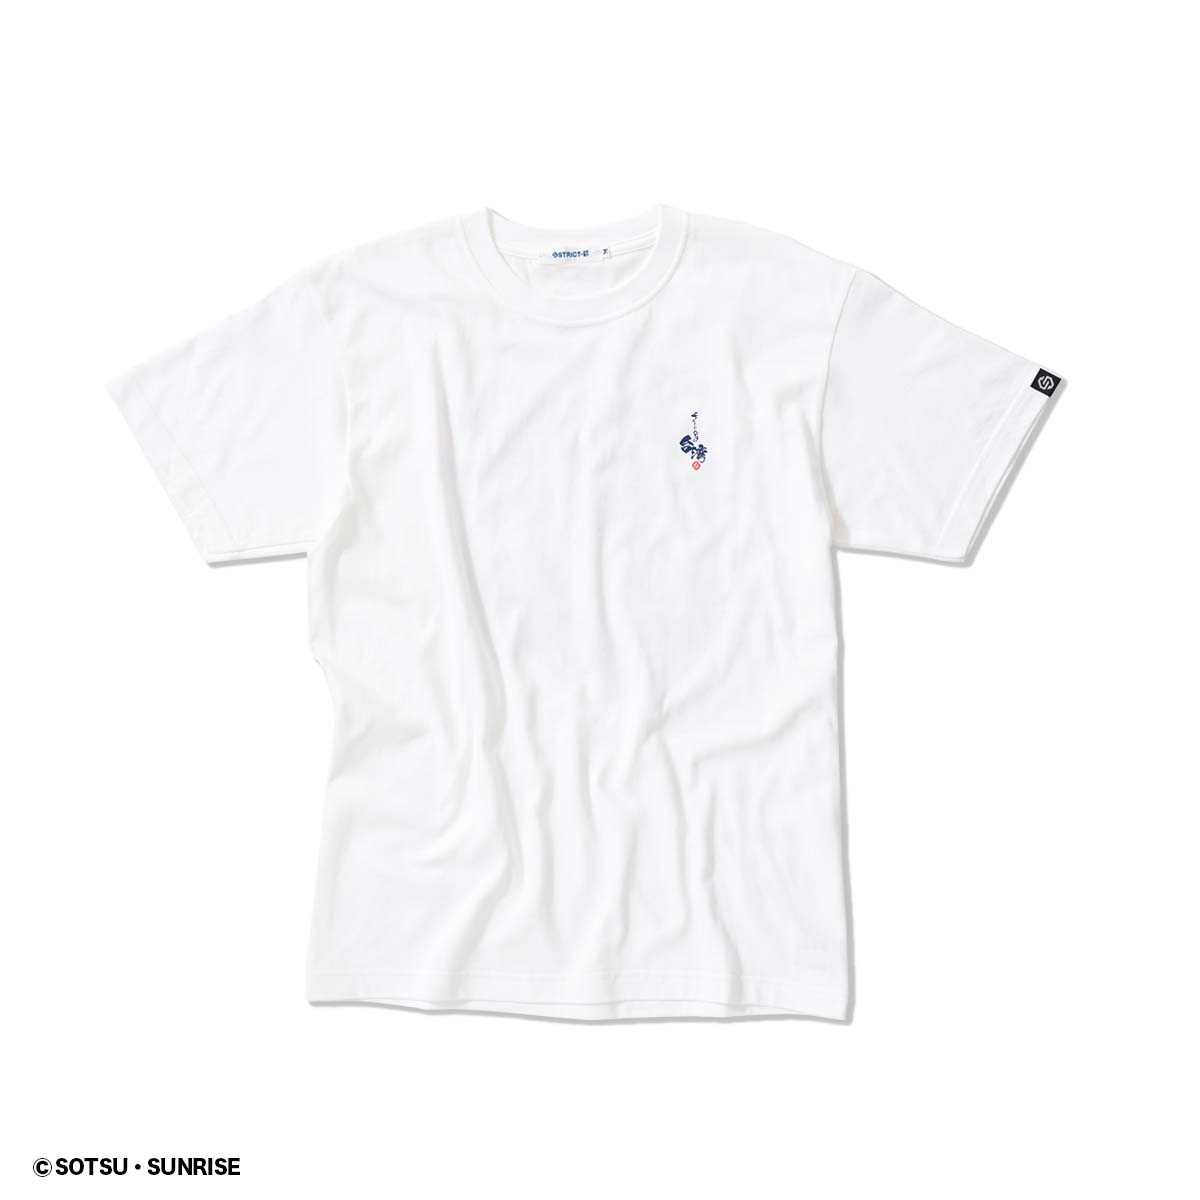 STRICT-G TAIWAN Original T-shirt Freedom Pattern White